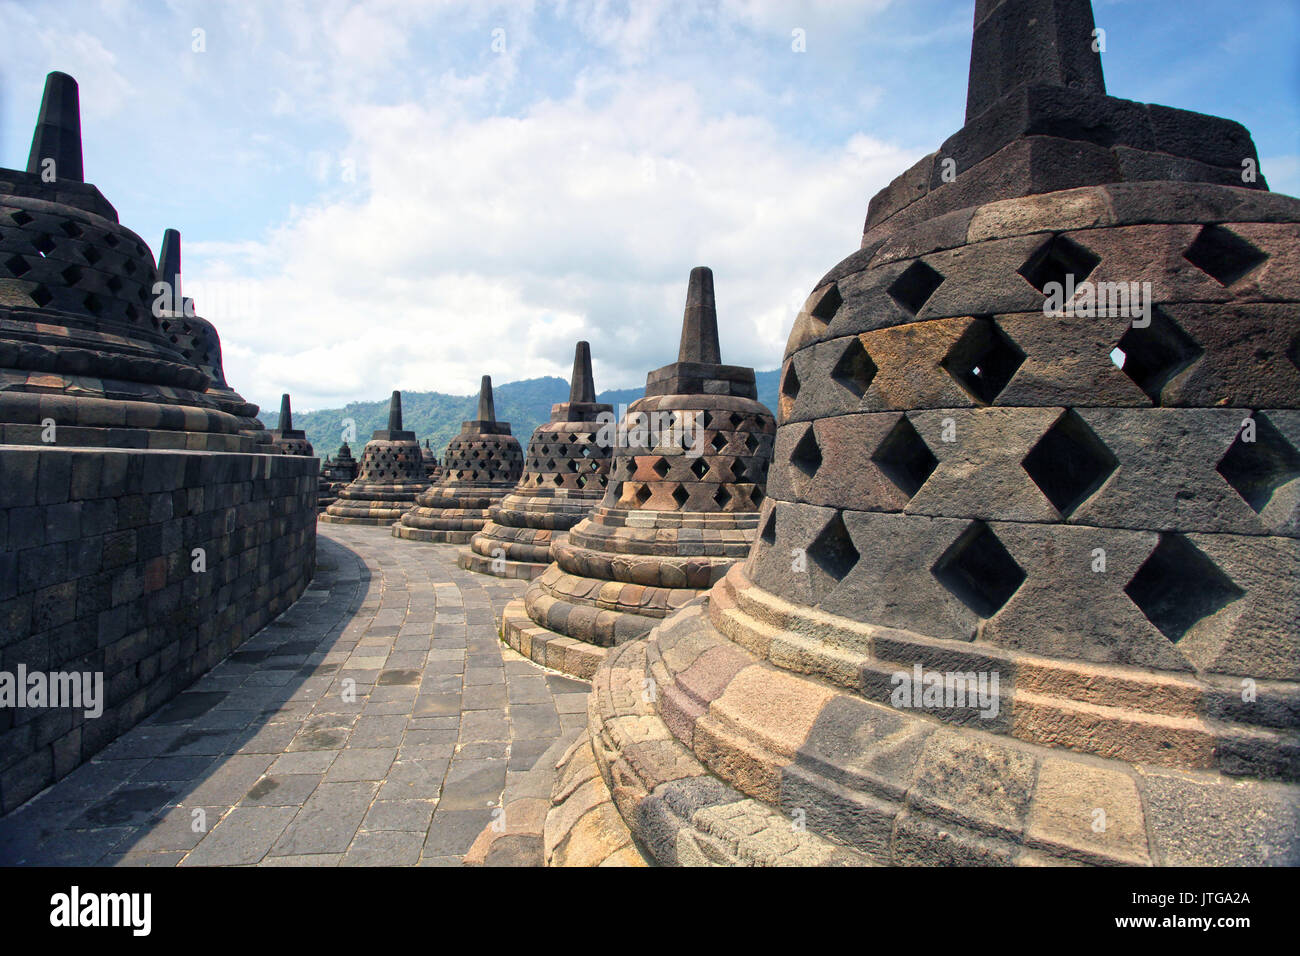 Borobudur Temple in Central Java, Indonesia Stock Photo